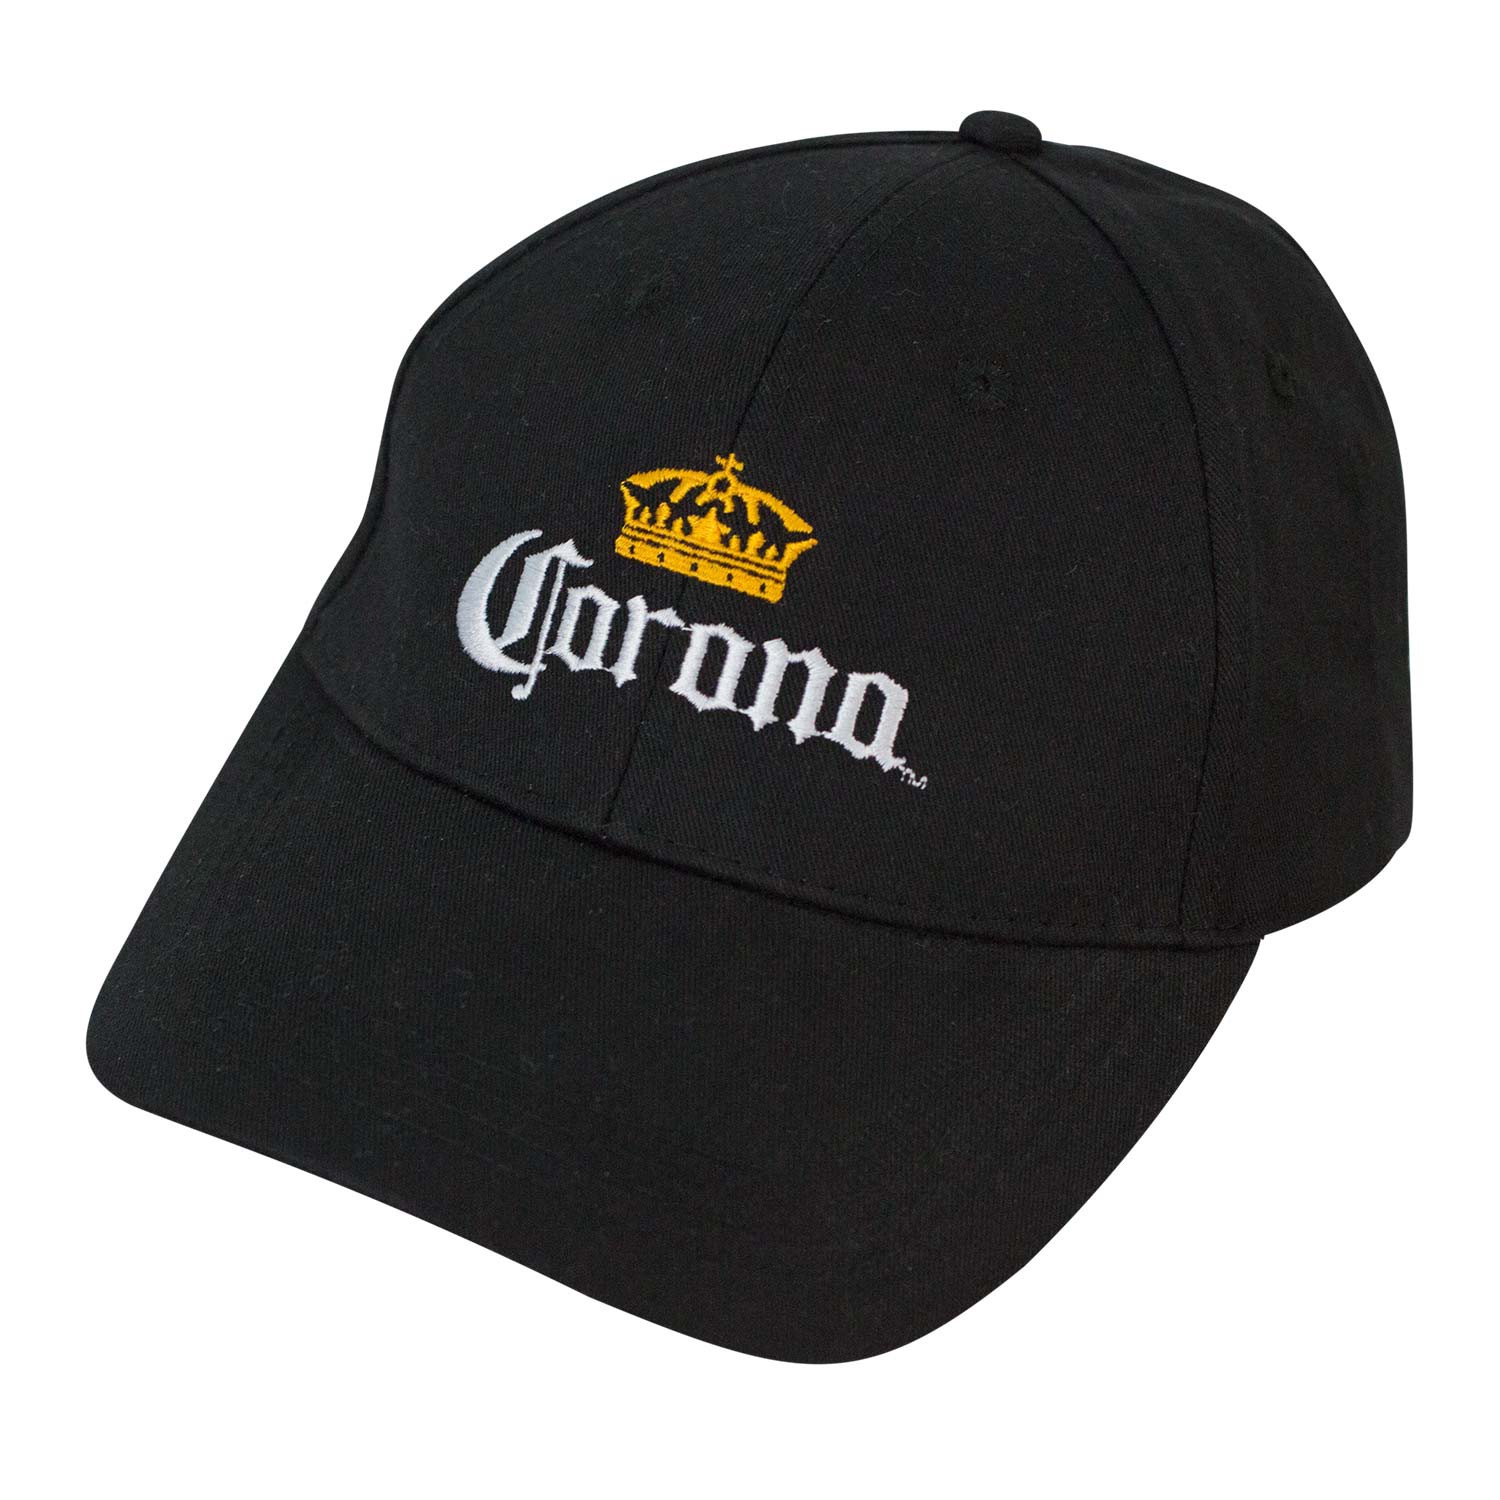 Corona Black Hat